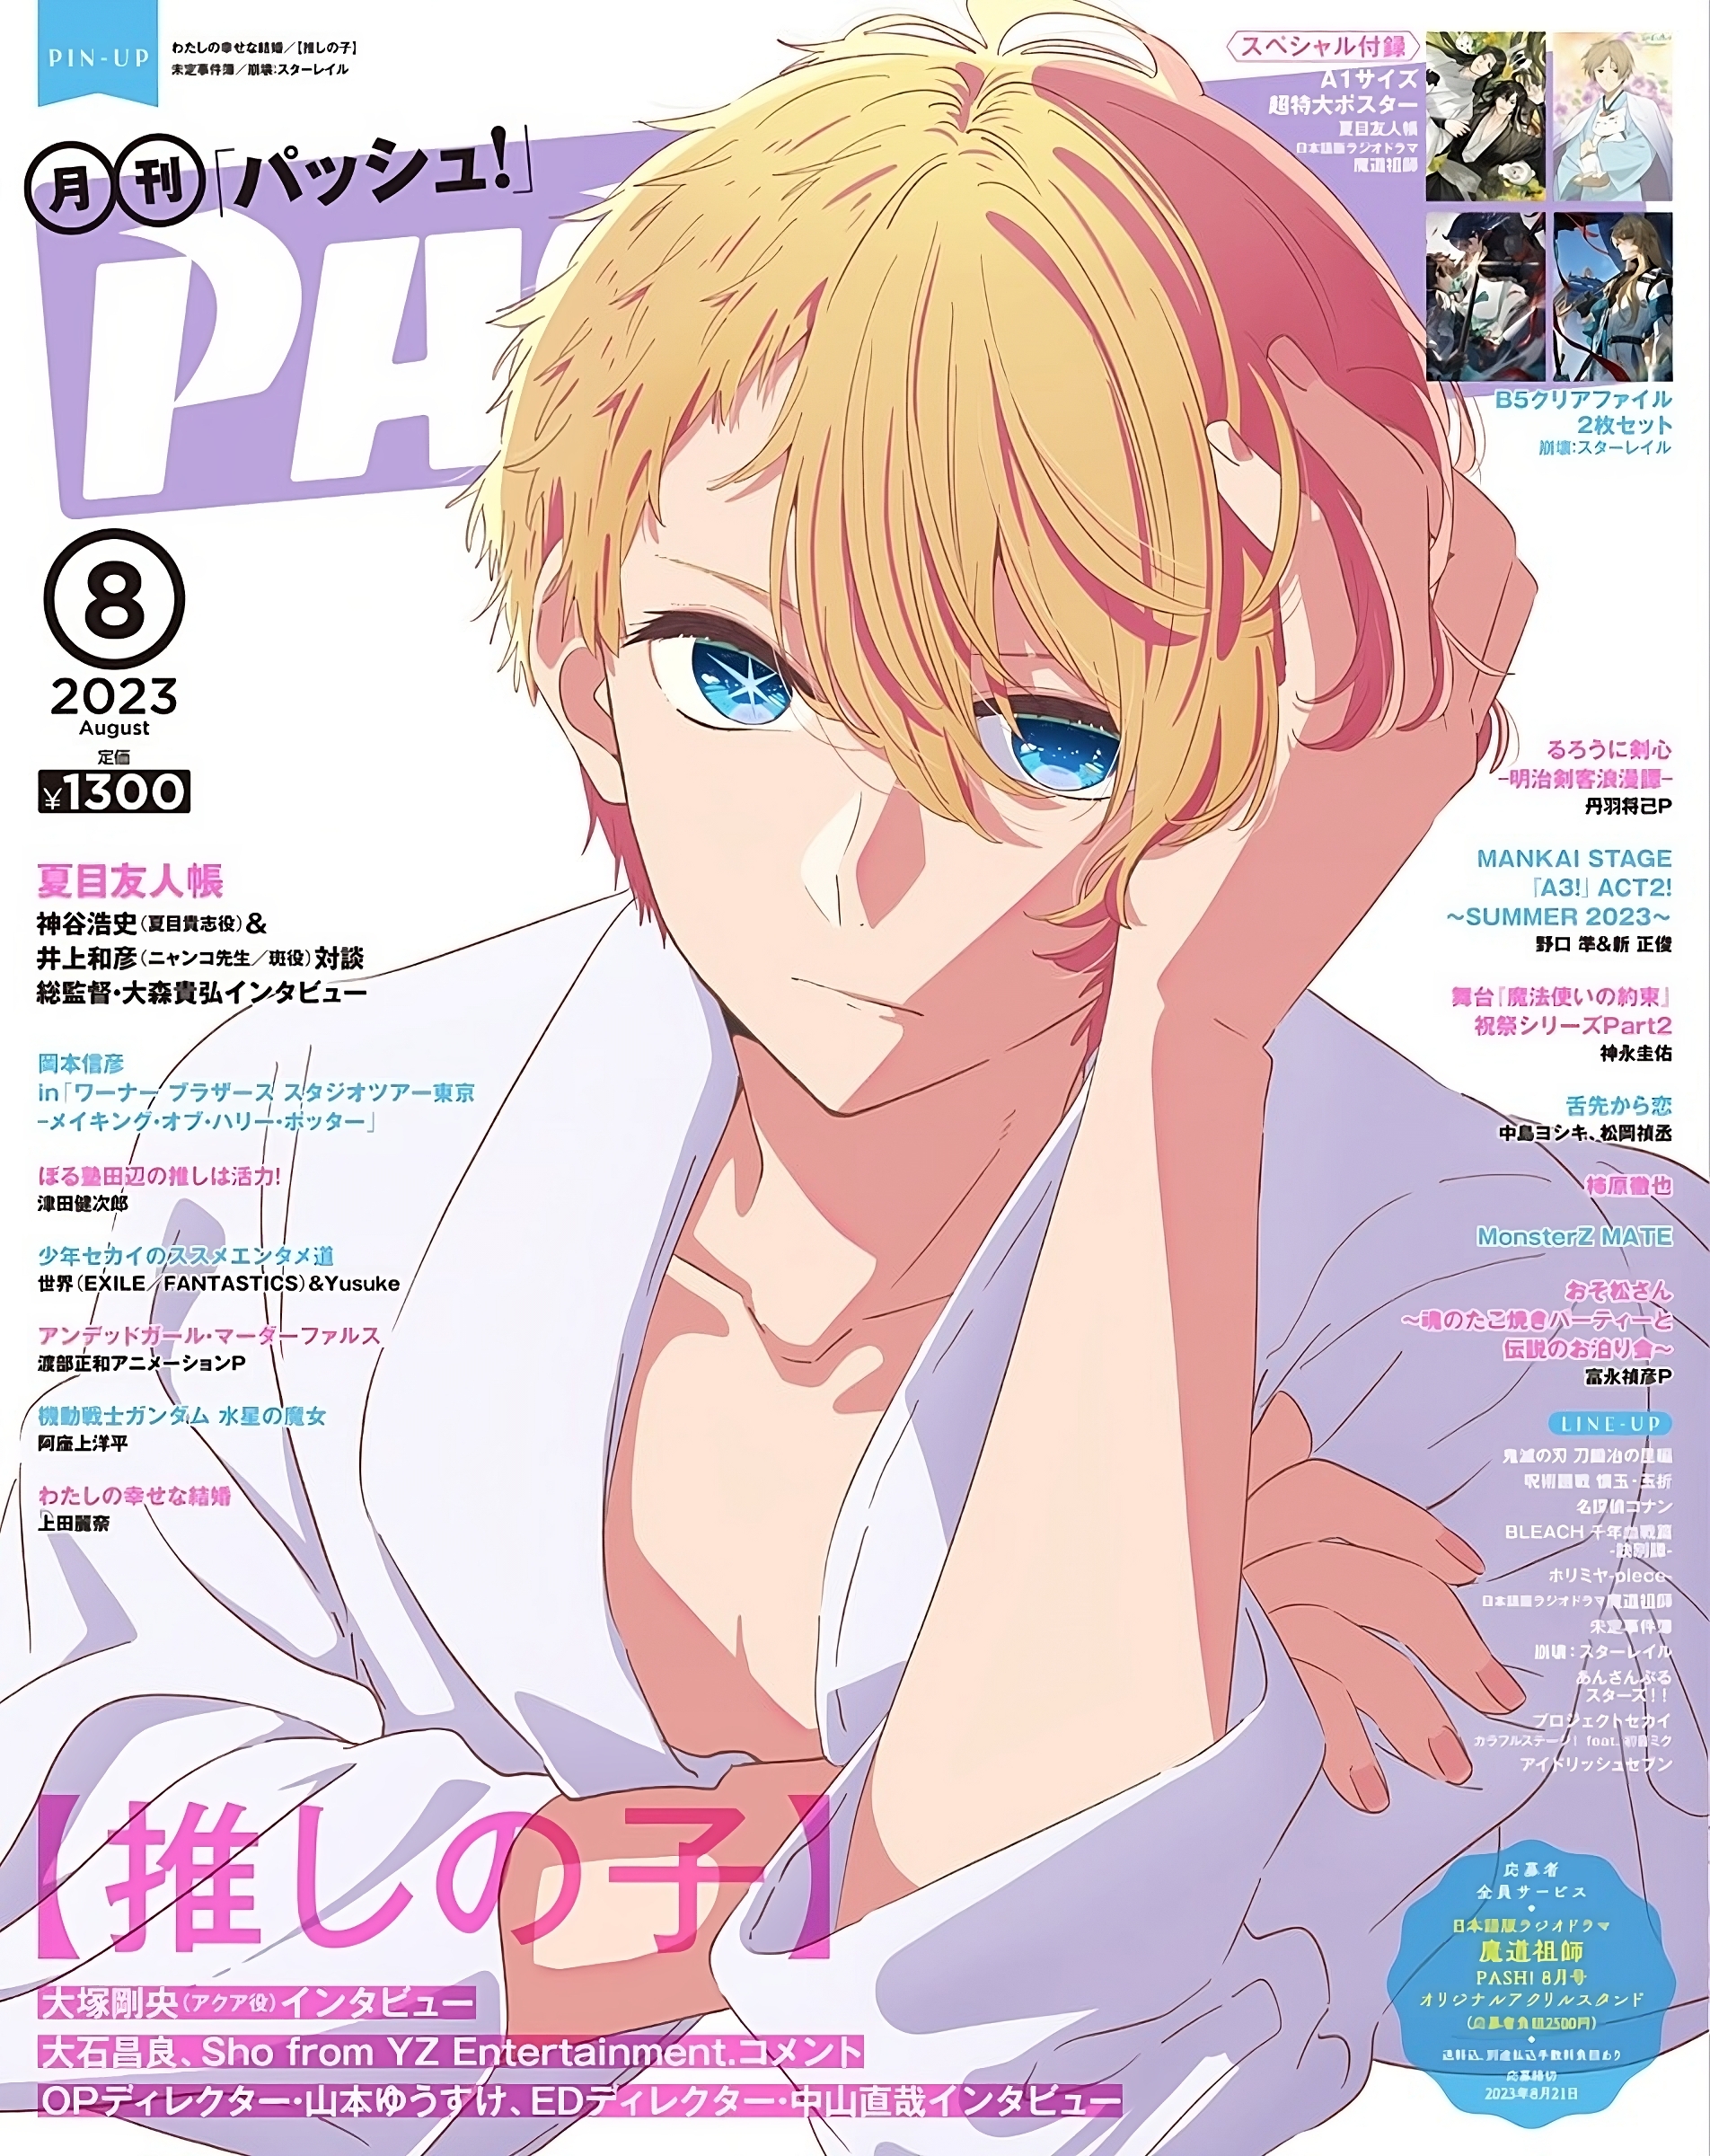 Aqua Hoshino graces the cover of PASH! magazine